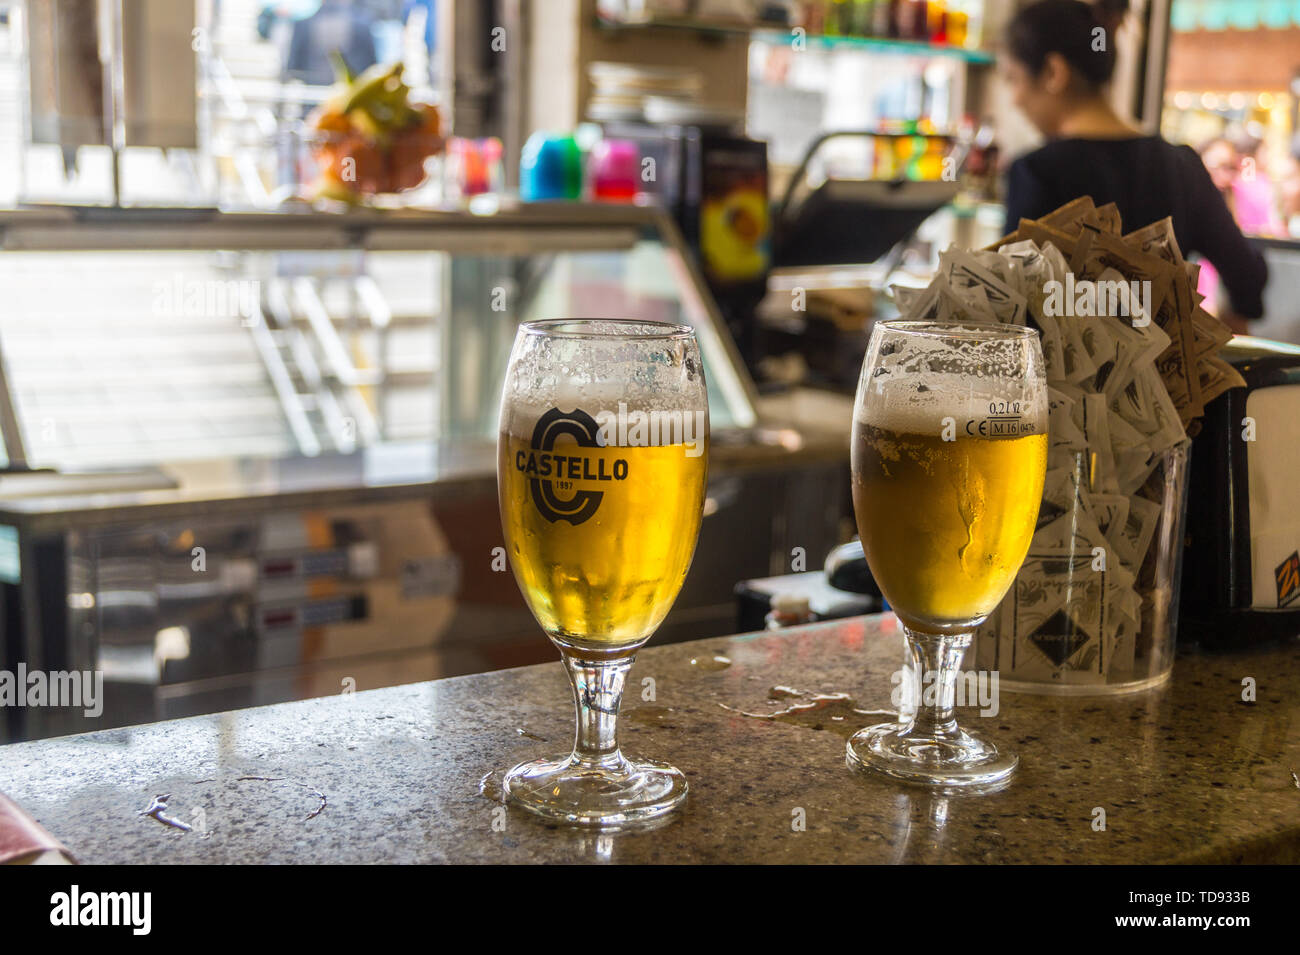 PHOTOGRAPH Two glasses of Castello beer  on a bar, Ponte delle Guglie, Venice, Veneto, Italy Stock Photo